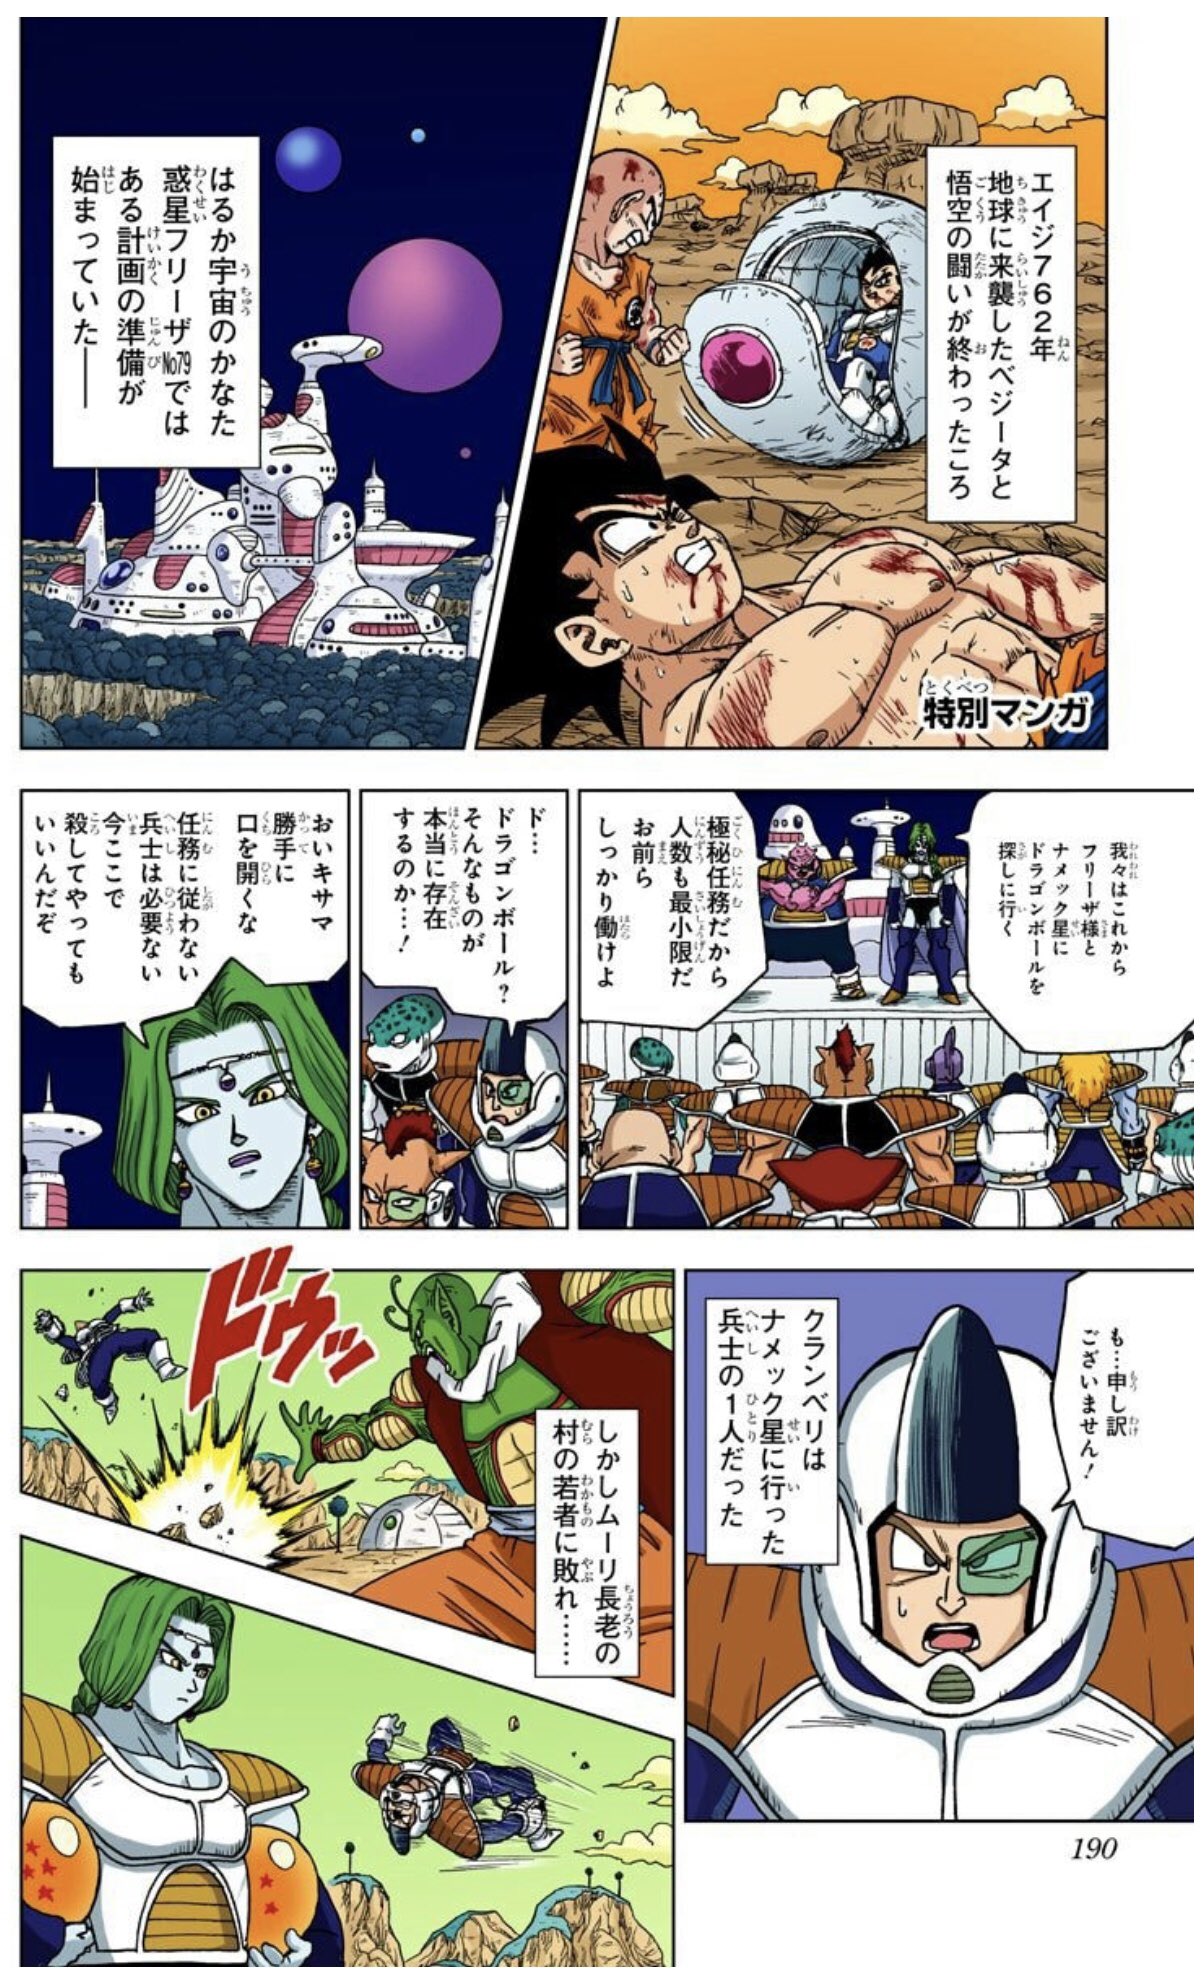 Dragon Ball Super Manga 1-18 complete full set Japanese Language